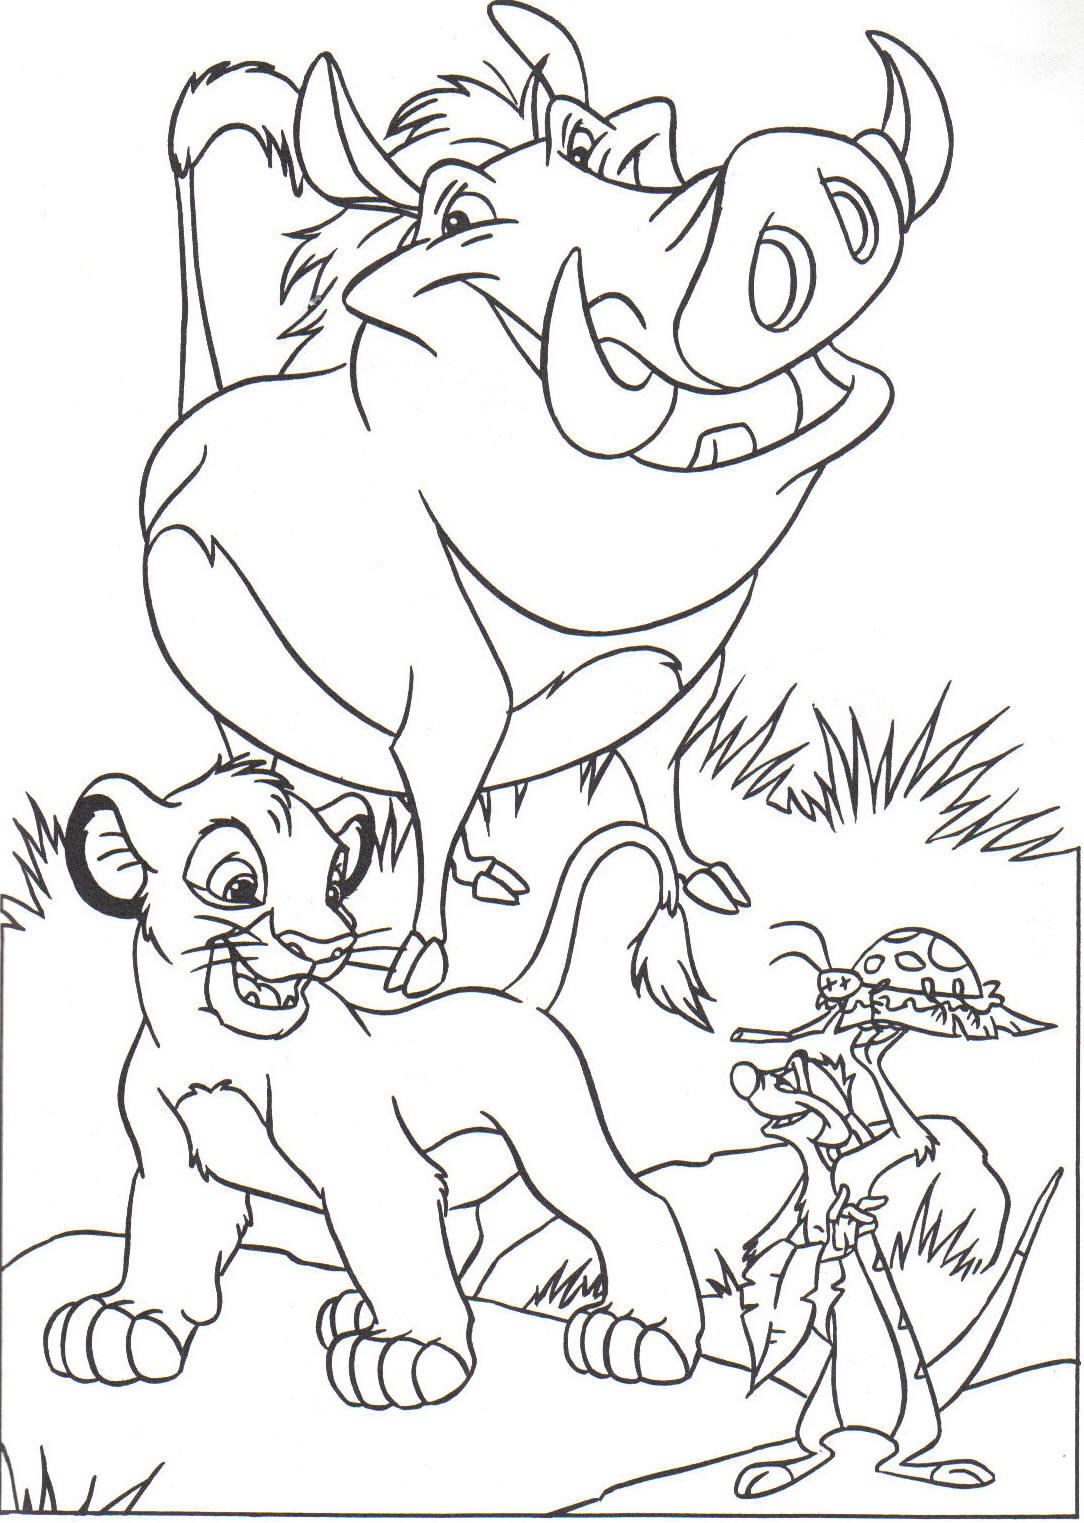 Timon, Pumbaa with their friend Simba